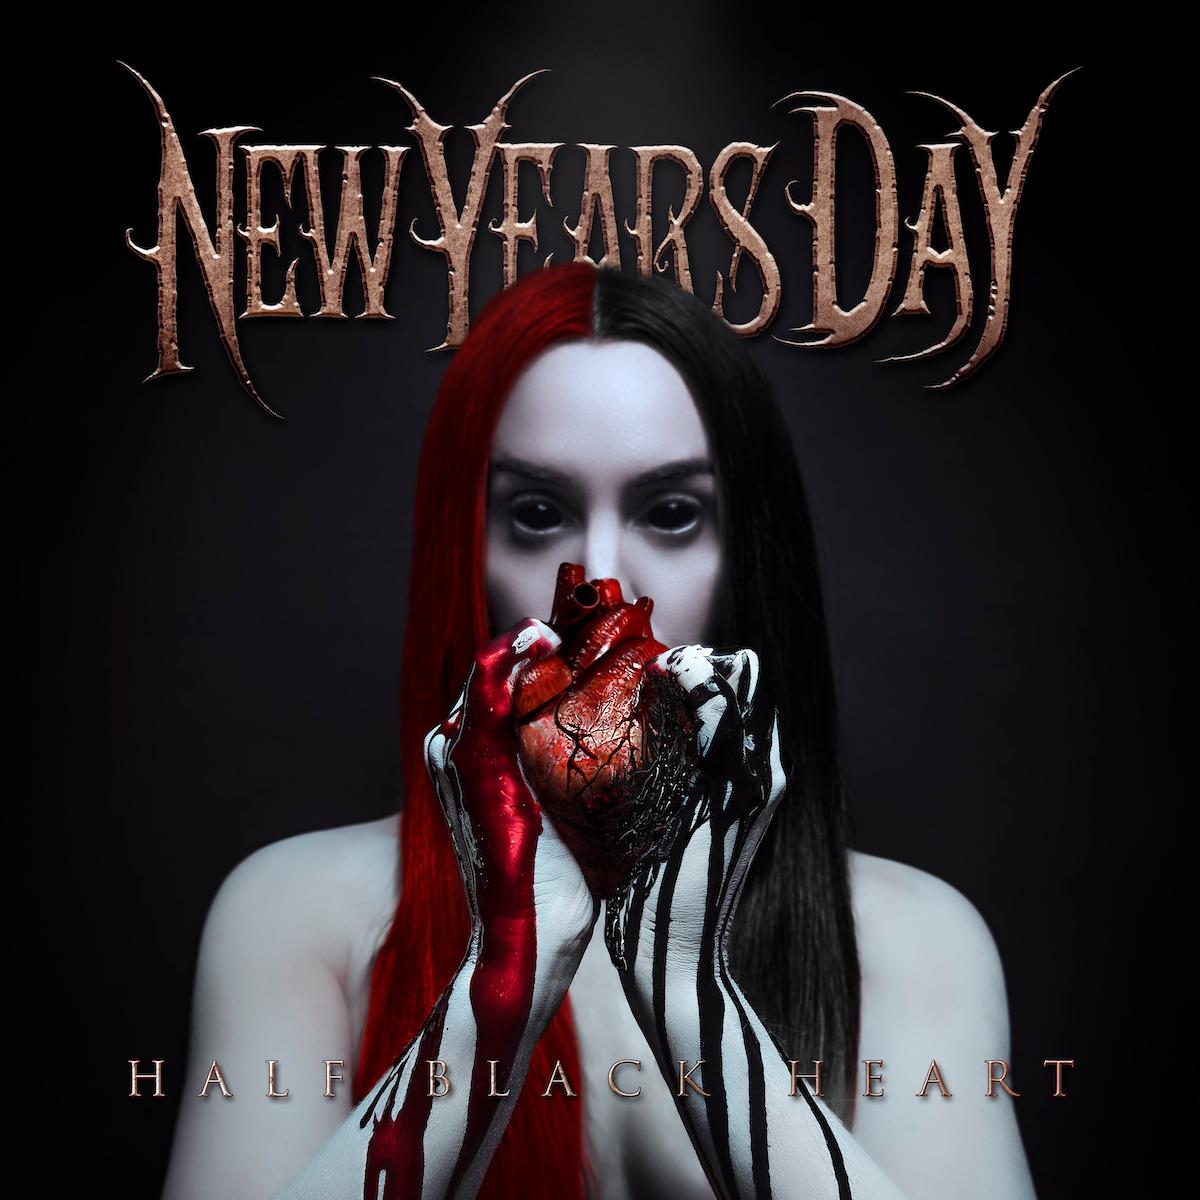 New Years Day Shares New Single "Half Black Heart"